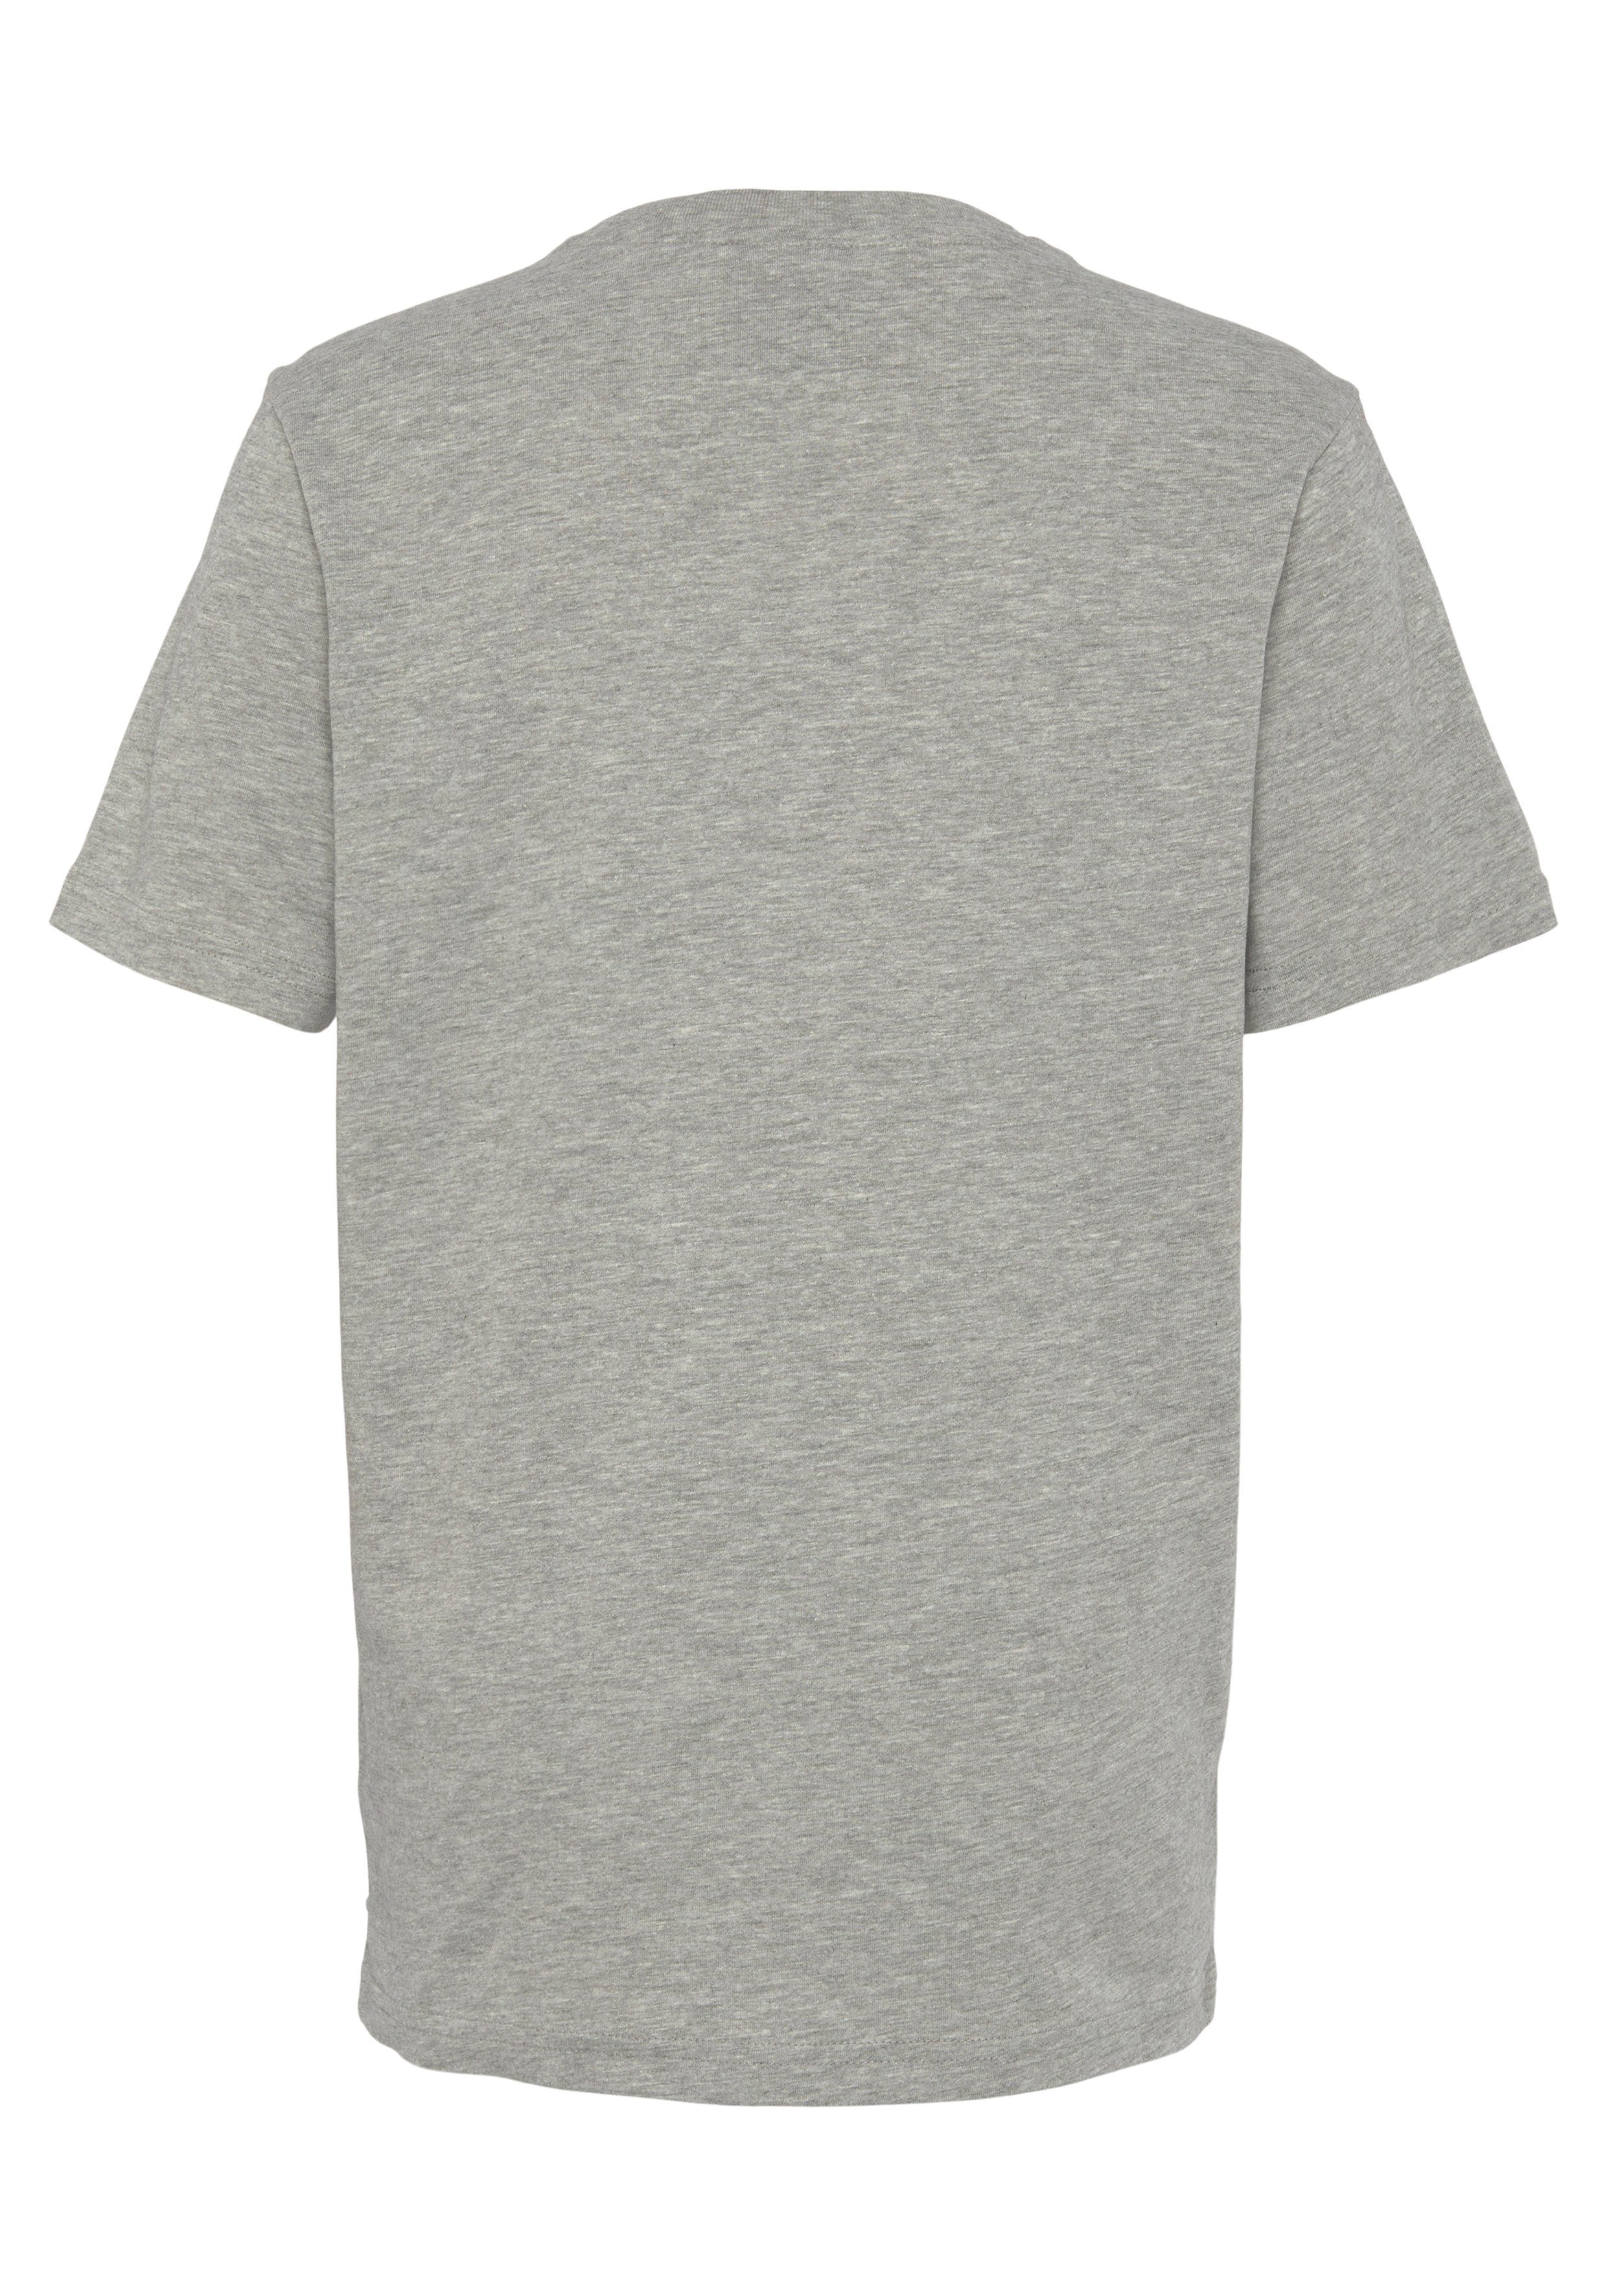 Crewneck Champion T-Shirt grau - für Kinder T-Shirt